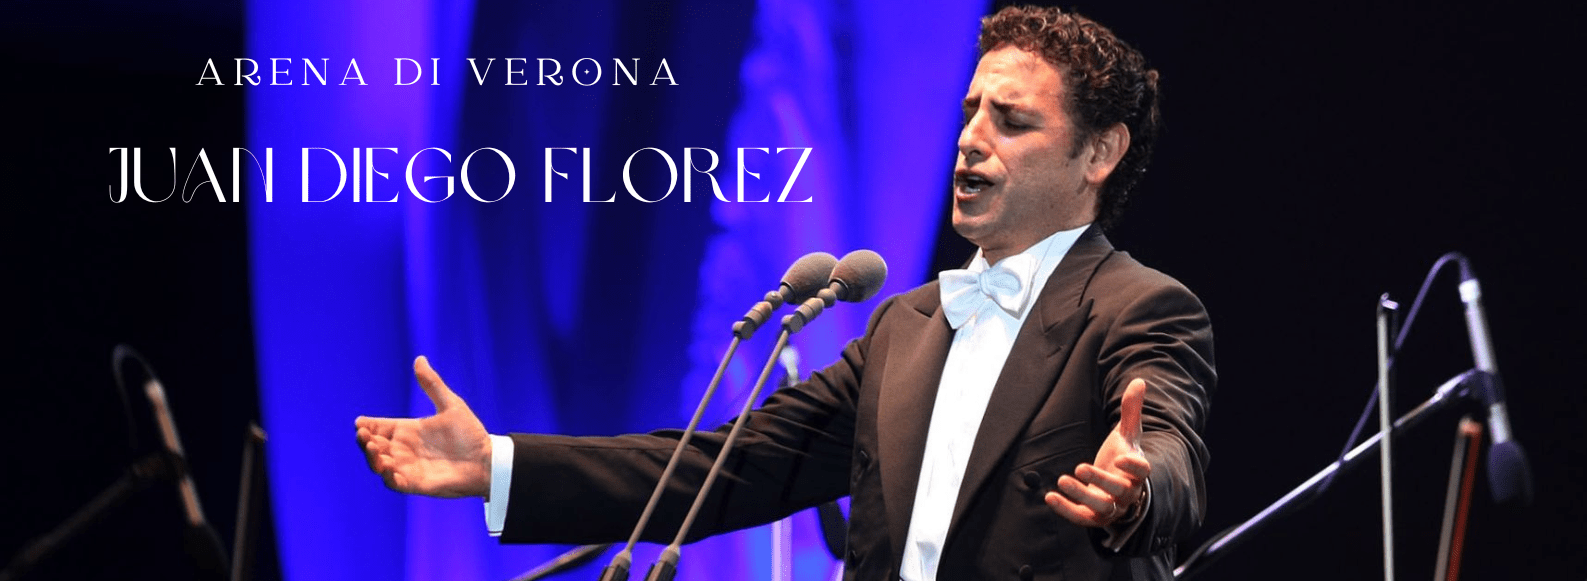 juan-diego-florez-tickets-arena-di-verona-tenor